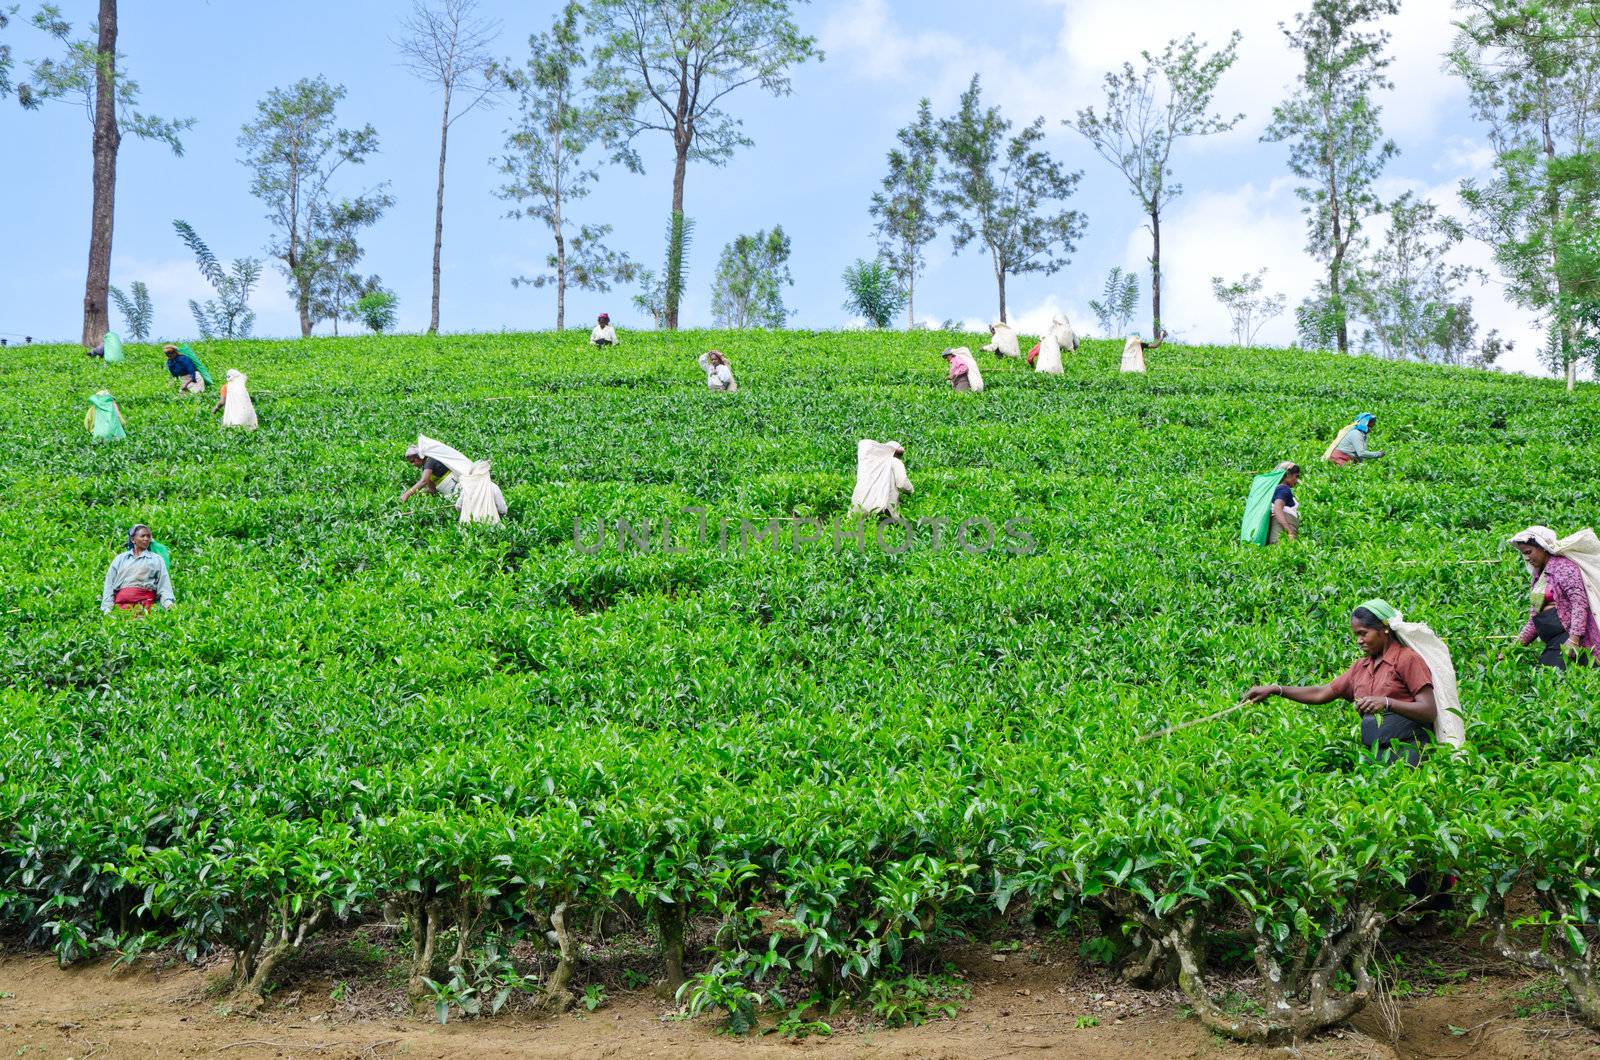 NEAR MOUNT PIDURUTALAGALA, SRI LANKA, DECEMBER 8, 2011. Tea pickers working on tea plantations near Mount Pidurutalagala, Sri Lanka, December 8, 2011.